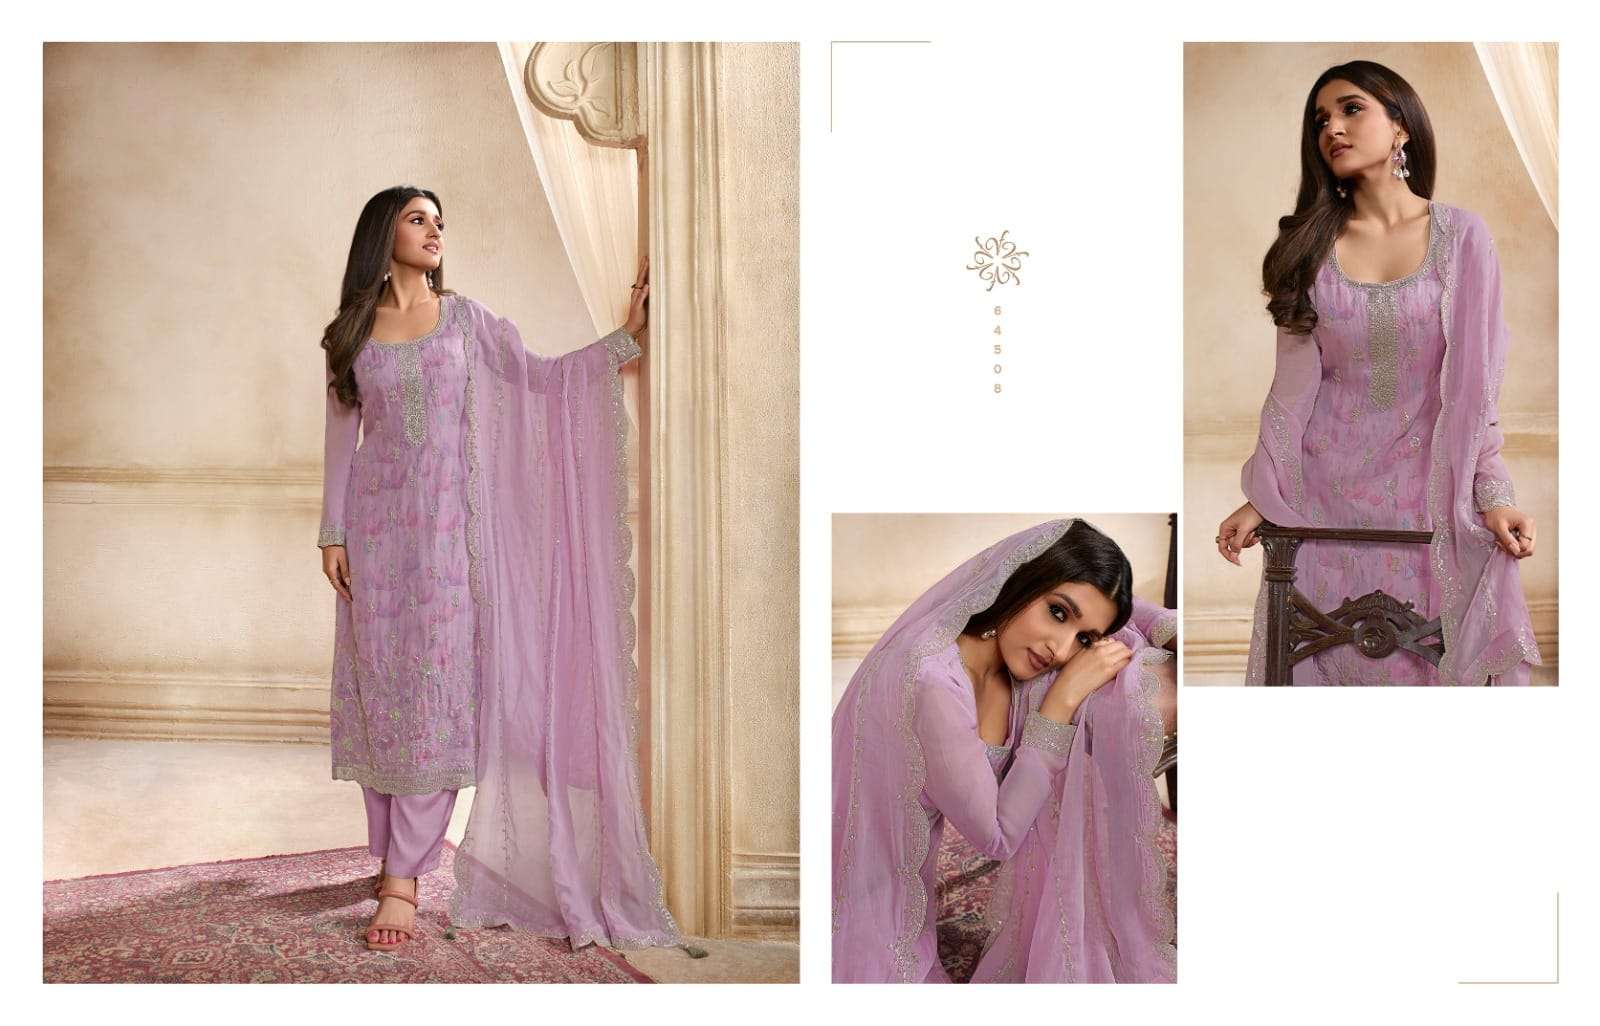 vinay fashion pearl 84501-84508 series designer party wear salwar kameez wholesale price surat